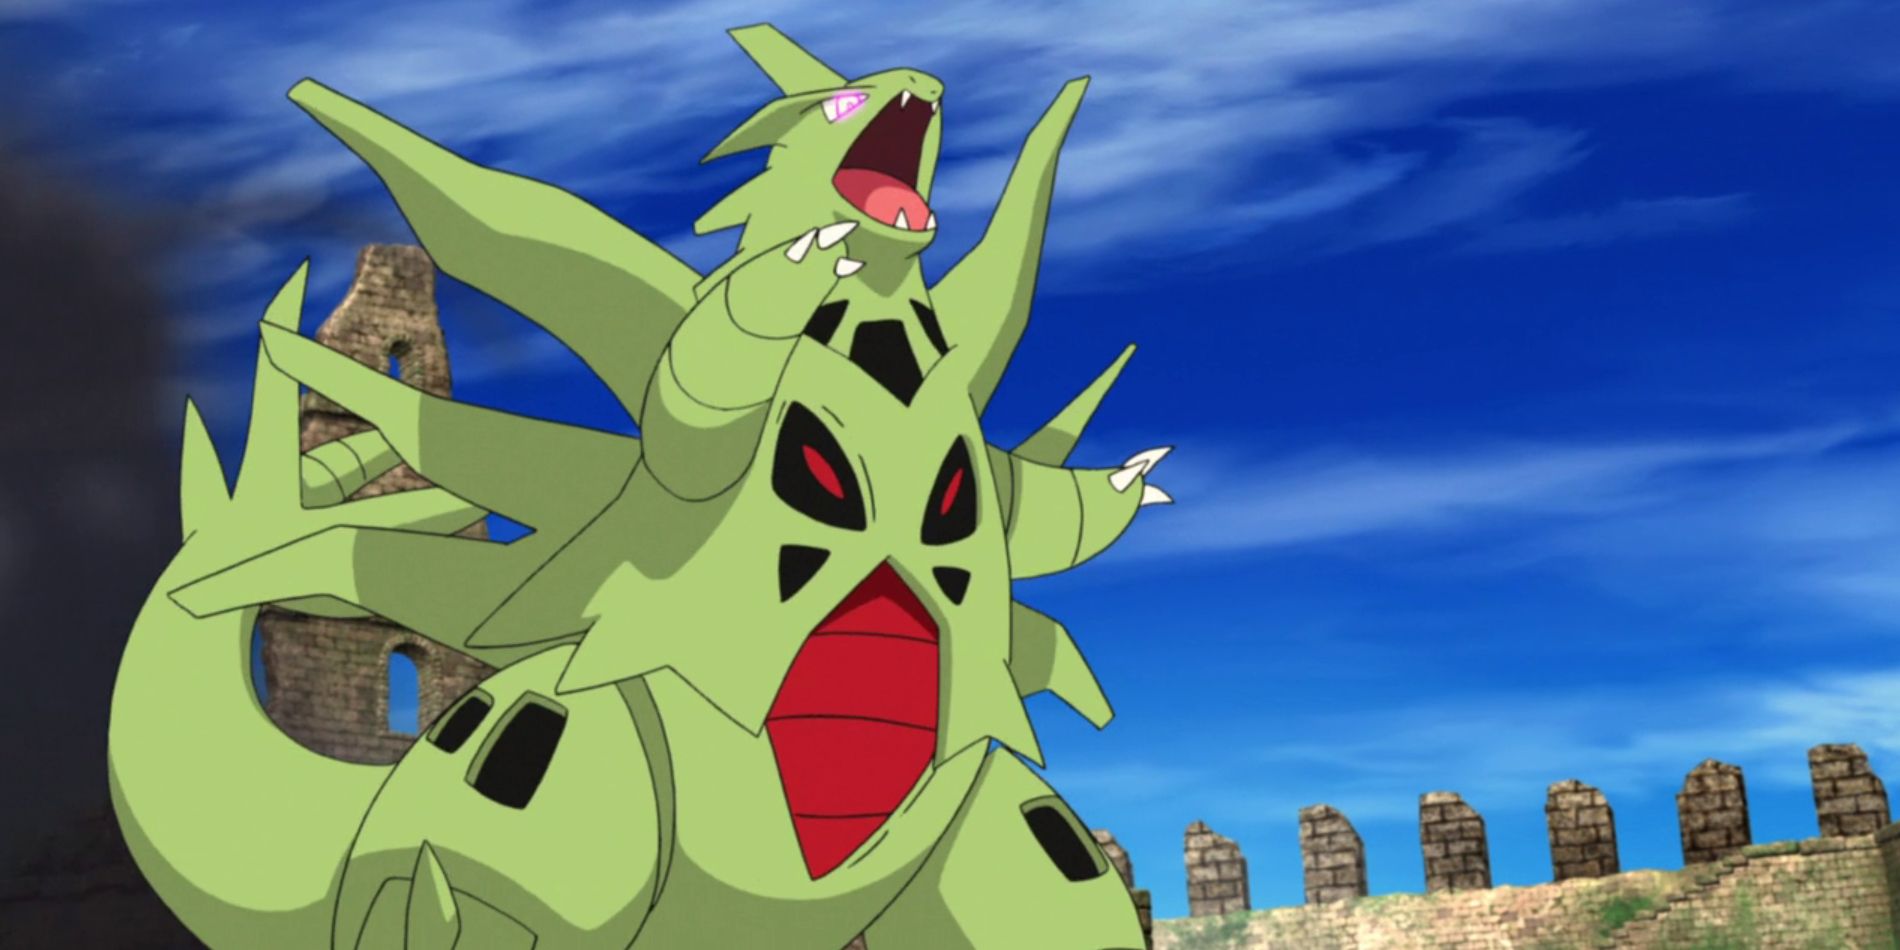 Mega Tyranitar roars and prepares to attack in the Pokemon anime